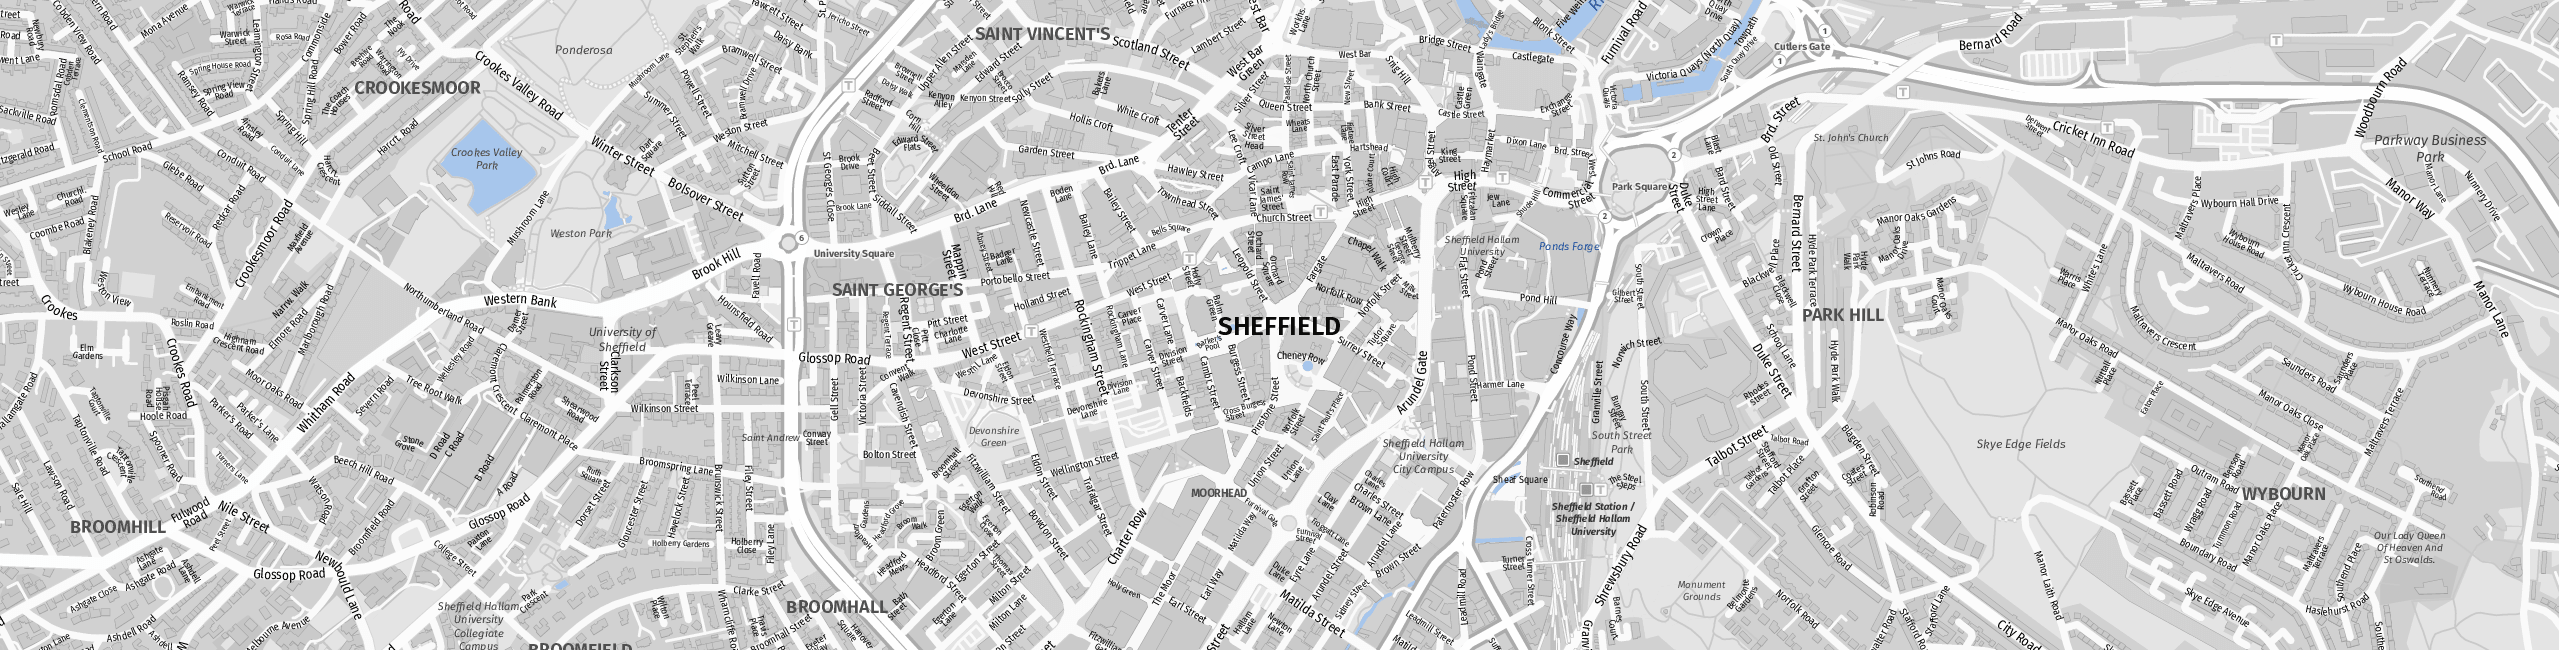 Stadtplan Sheffield zum Downloaden.